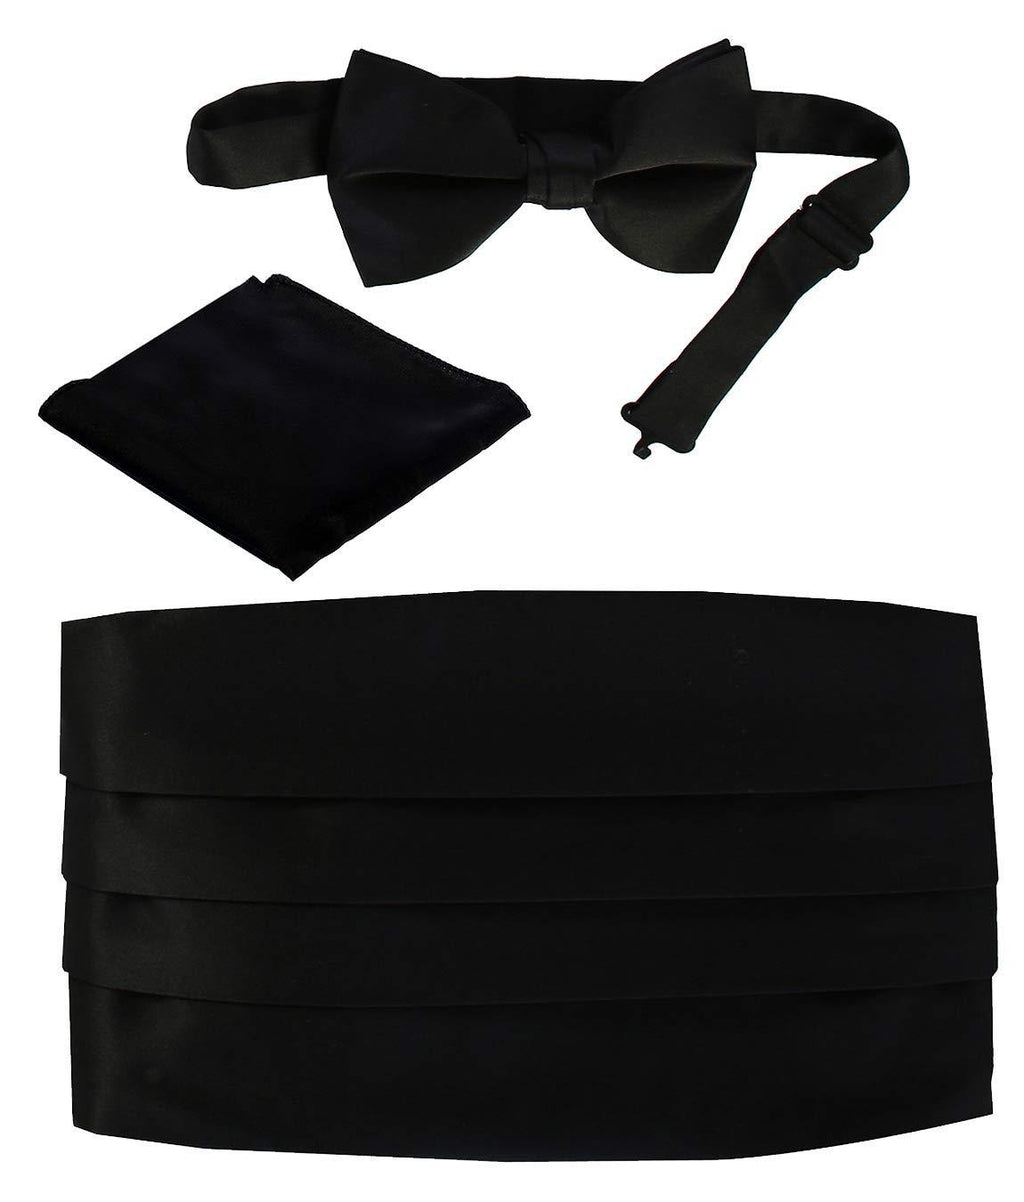 [Australia] - Gioberti Men's Adjustable Satin And Paisley Cummerbund Set With Formal Bow Tie and Pocket Square Black 